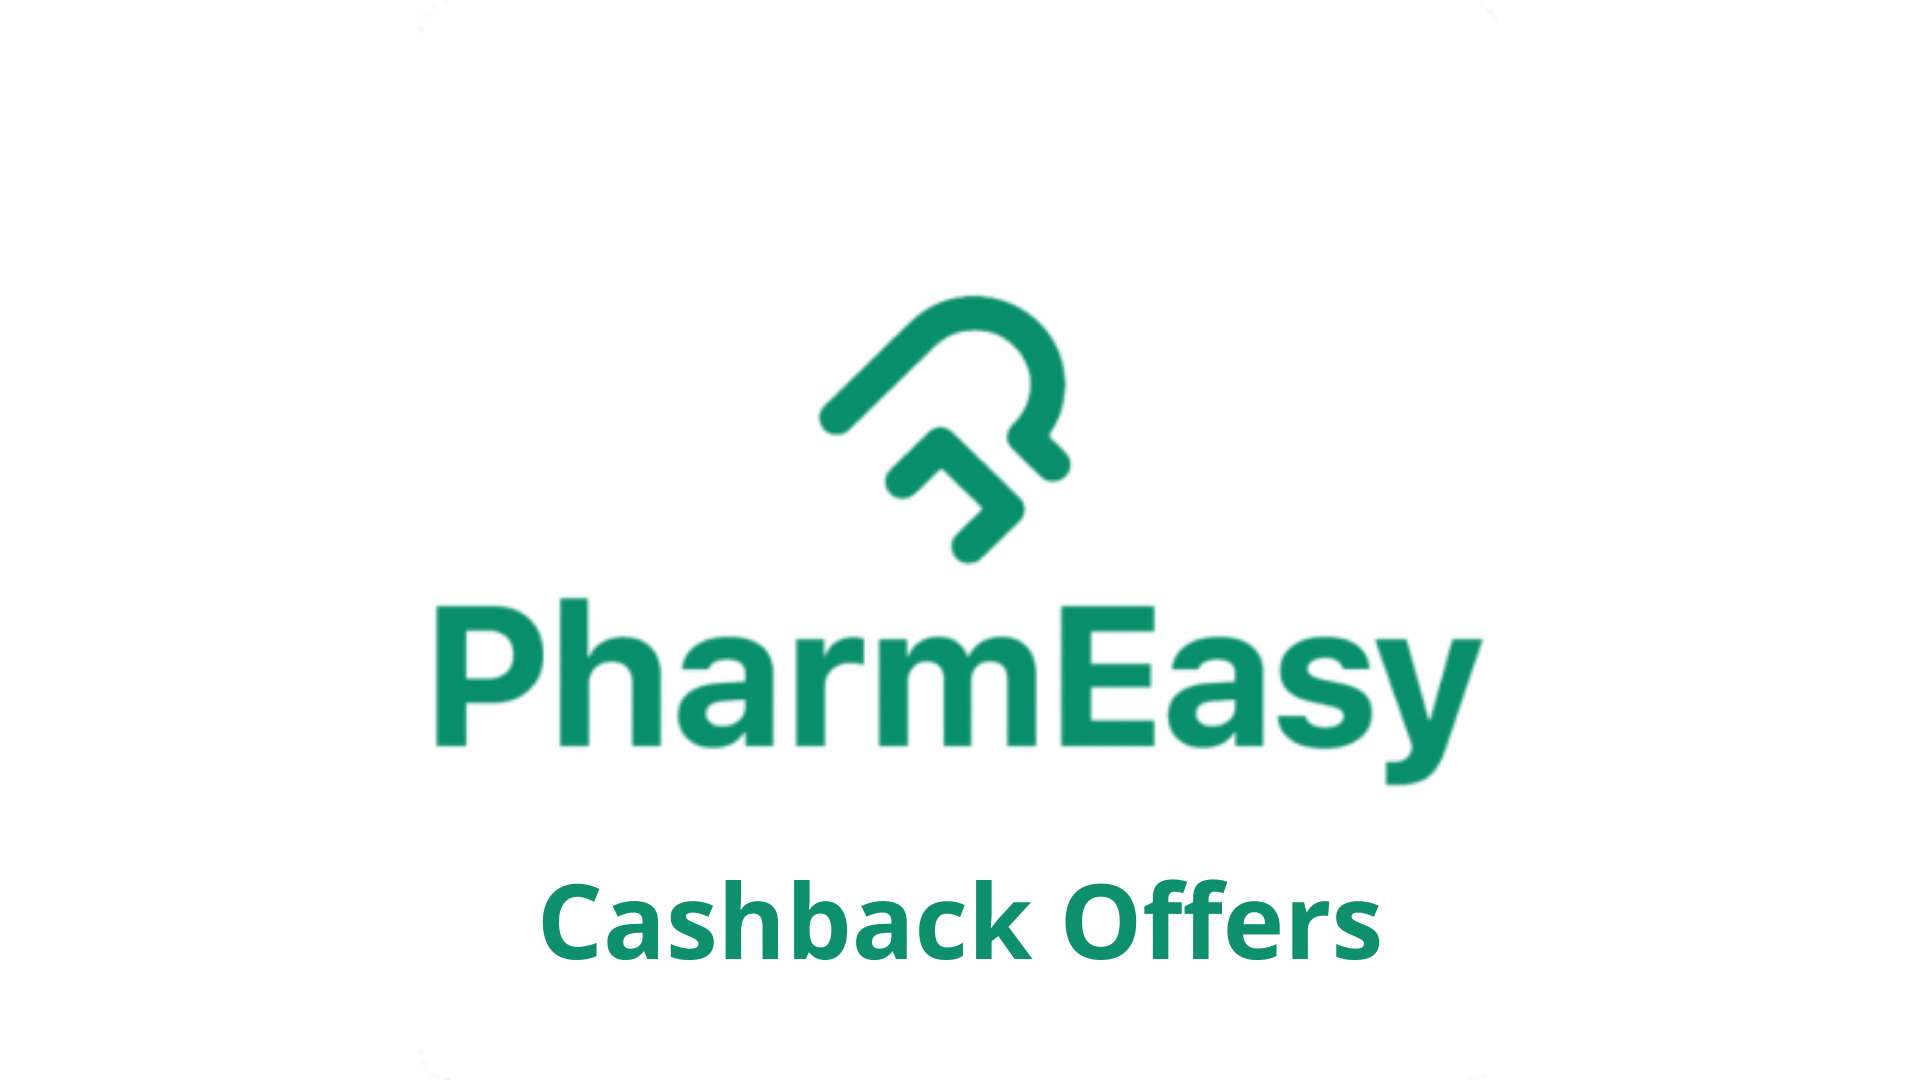 PharmEasy Paypal Cashback Offer - Up to Rs. 600 Cashback 